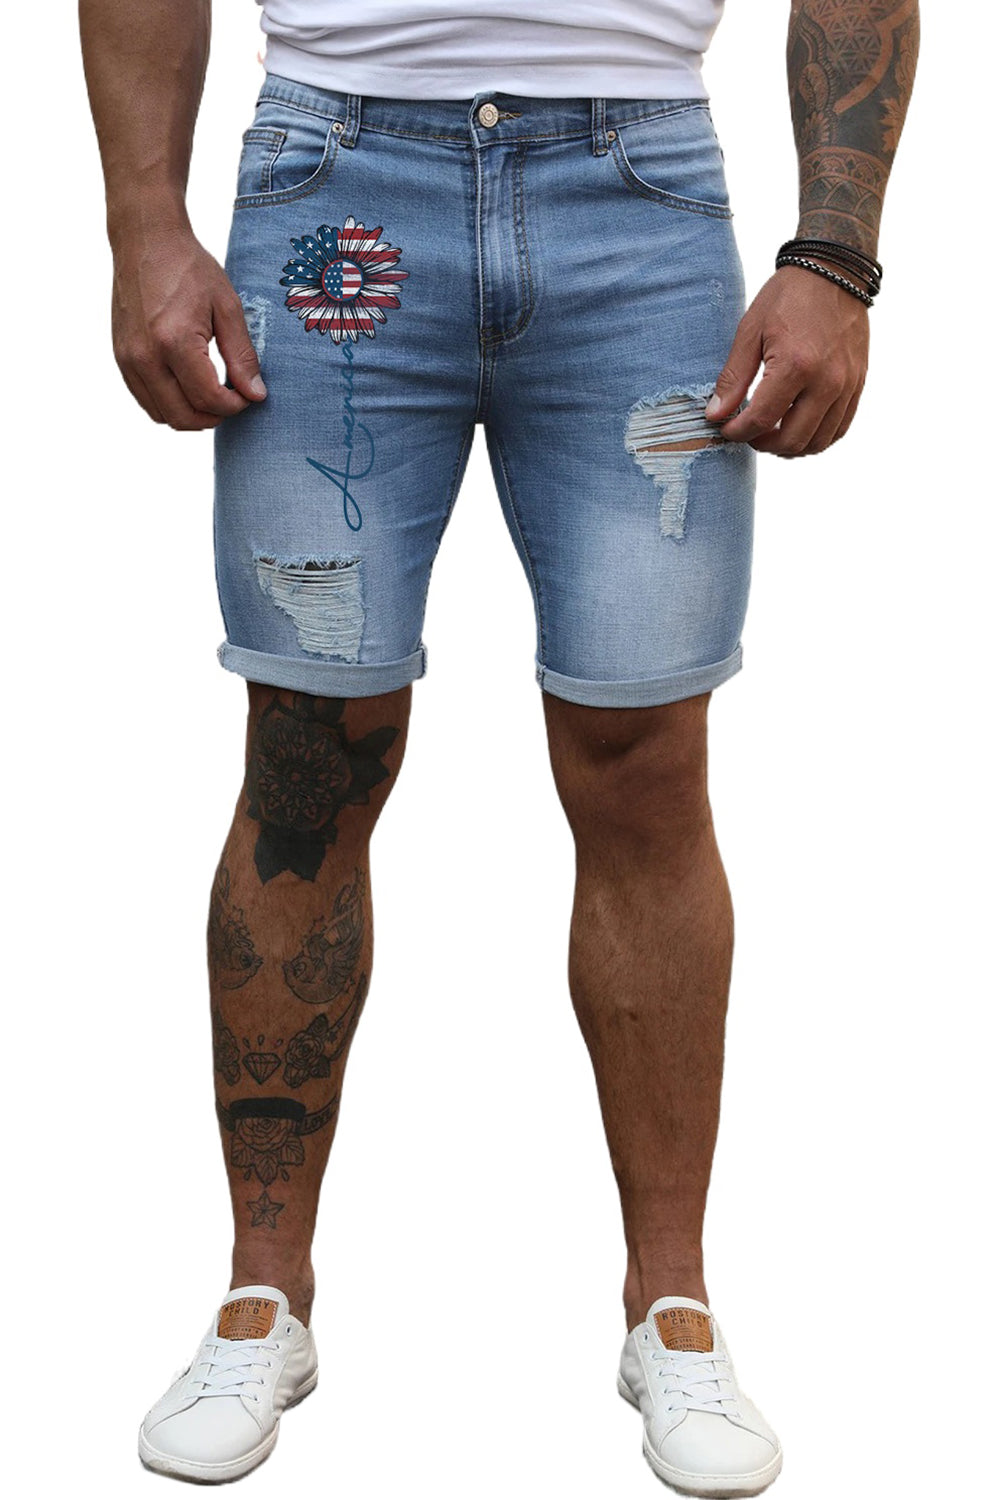 Sky Blue America Flag Sunflower Ripped Denim Shorts Men's Pants JT's Designer Fashion